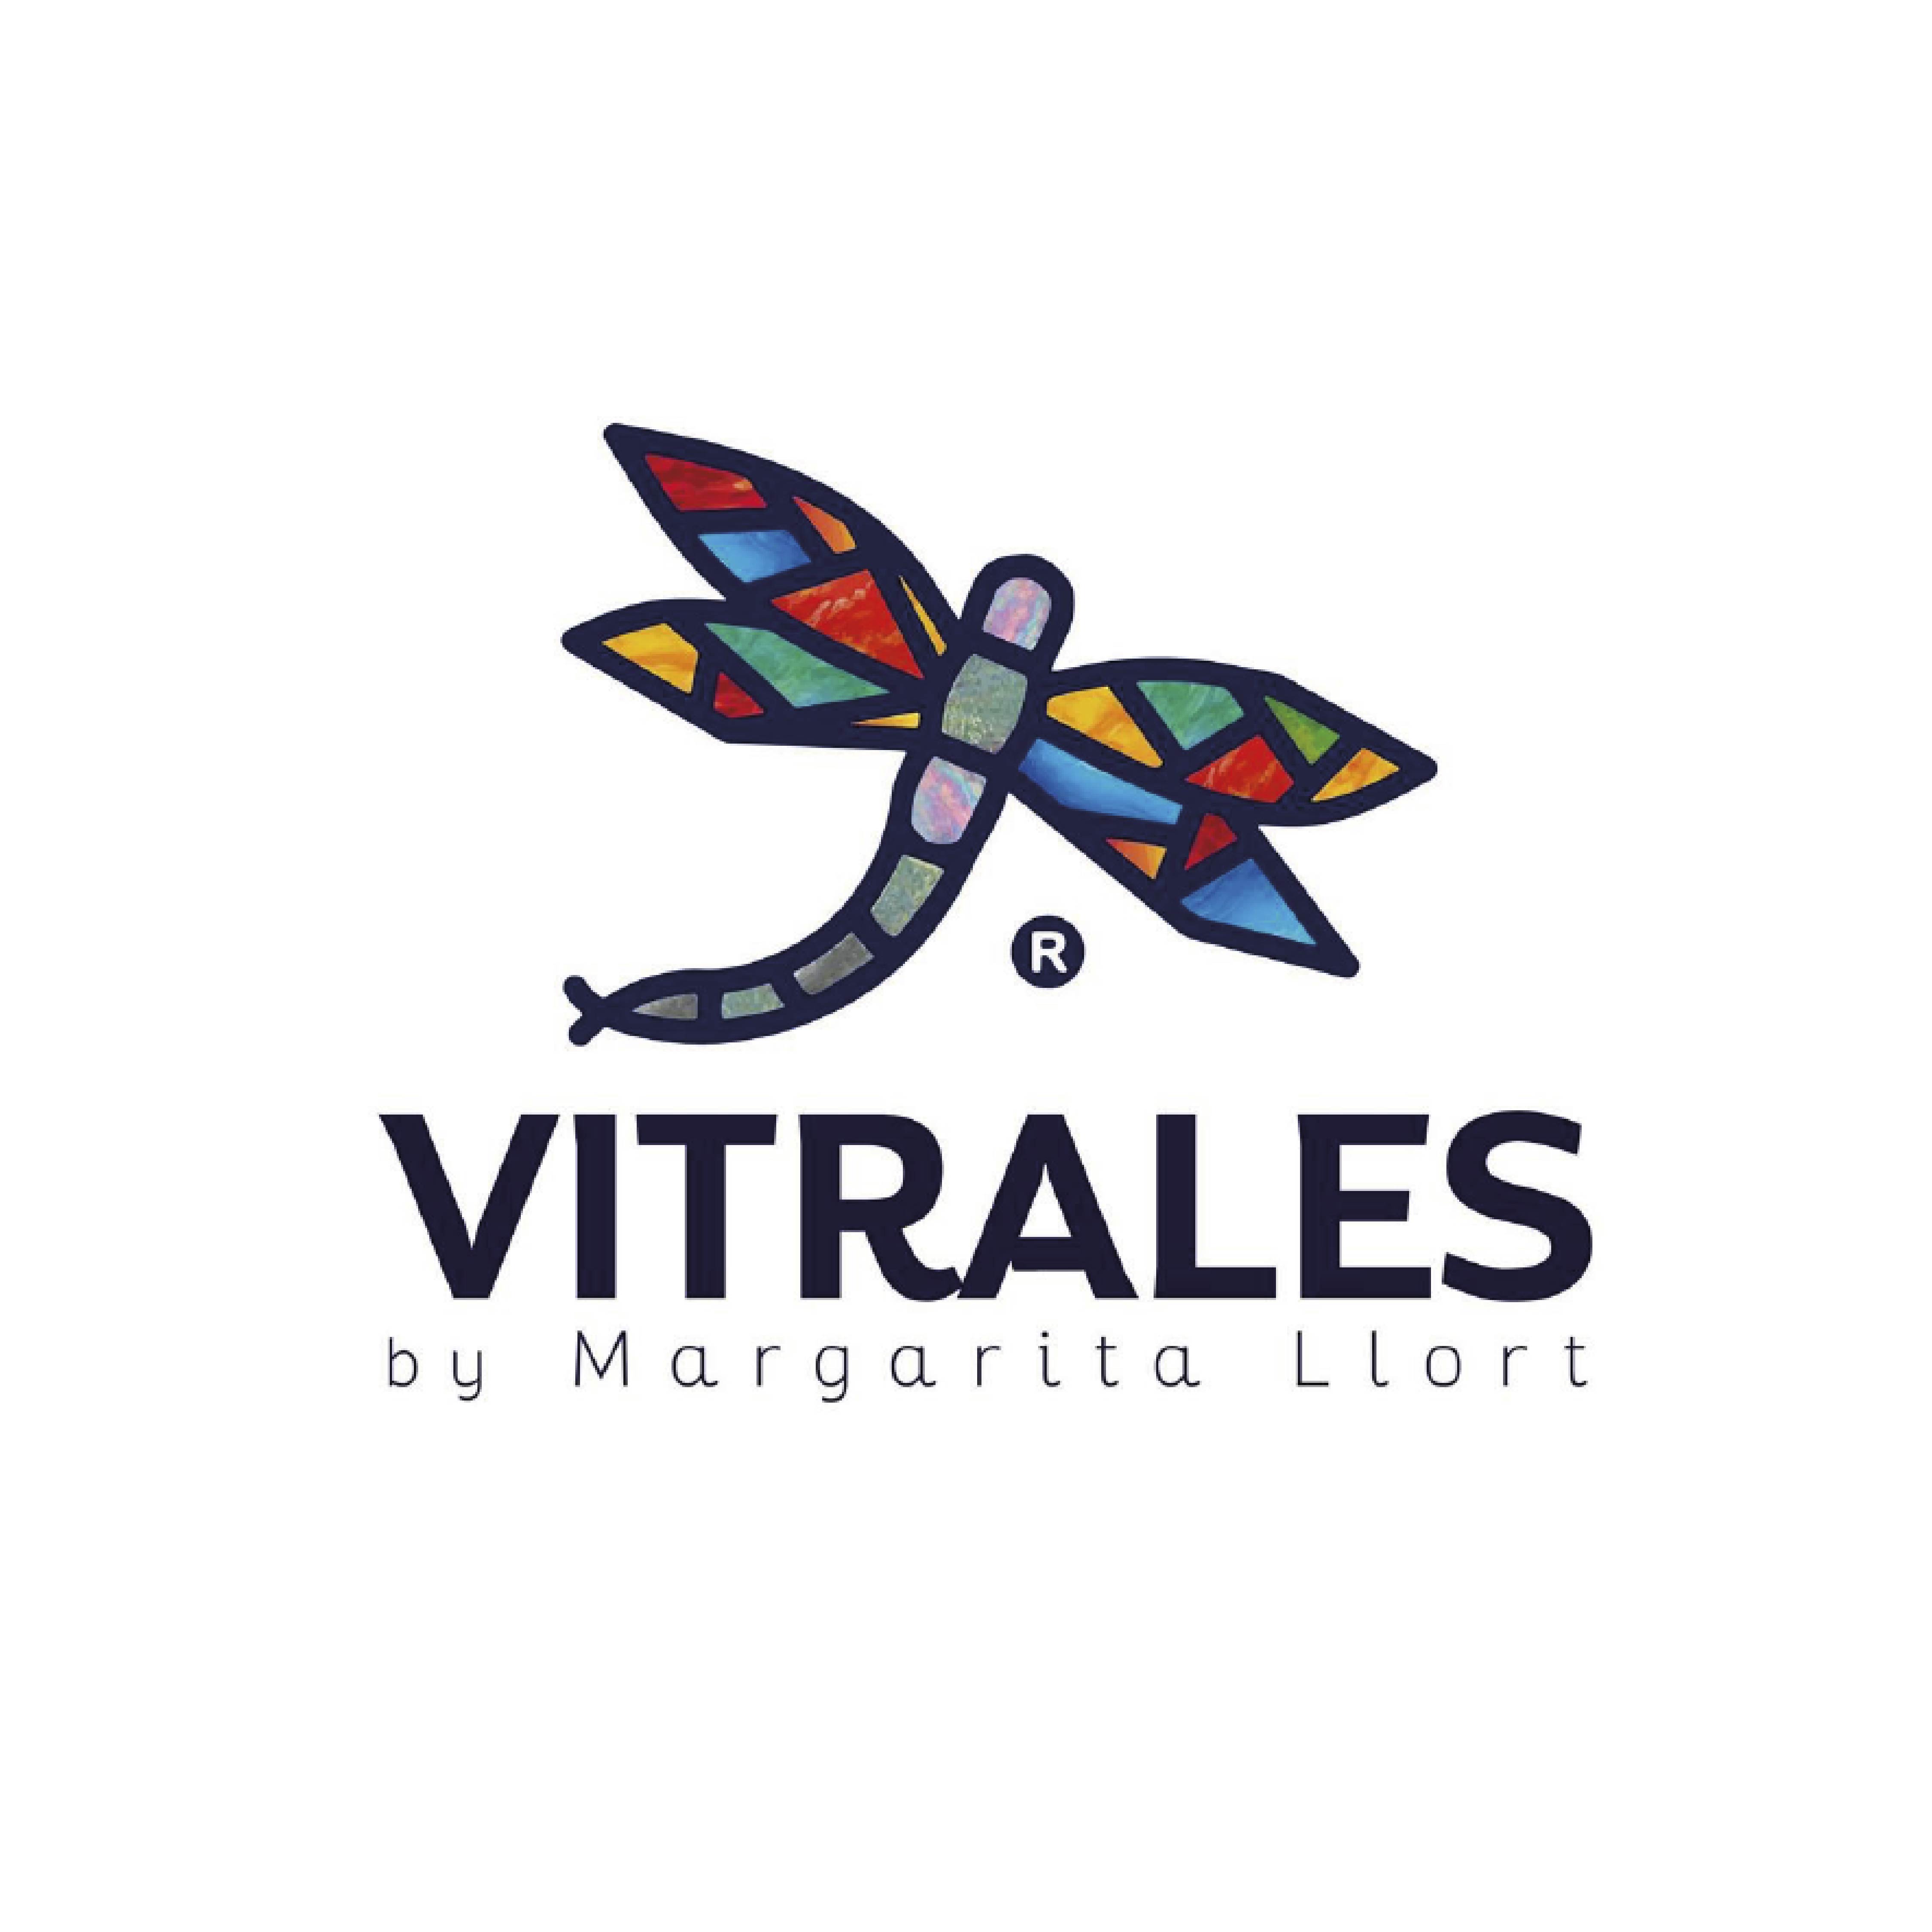 Vitrales by Margarita Llort